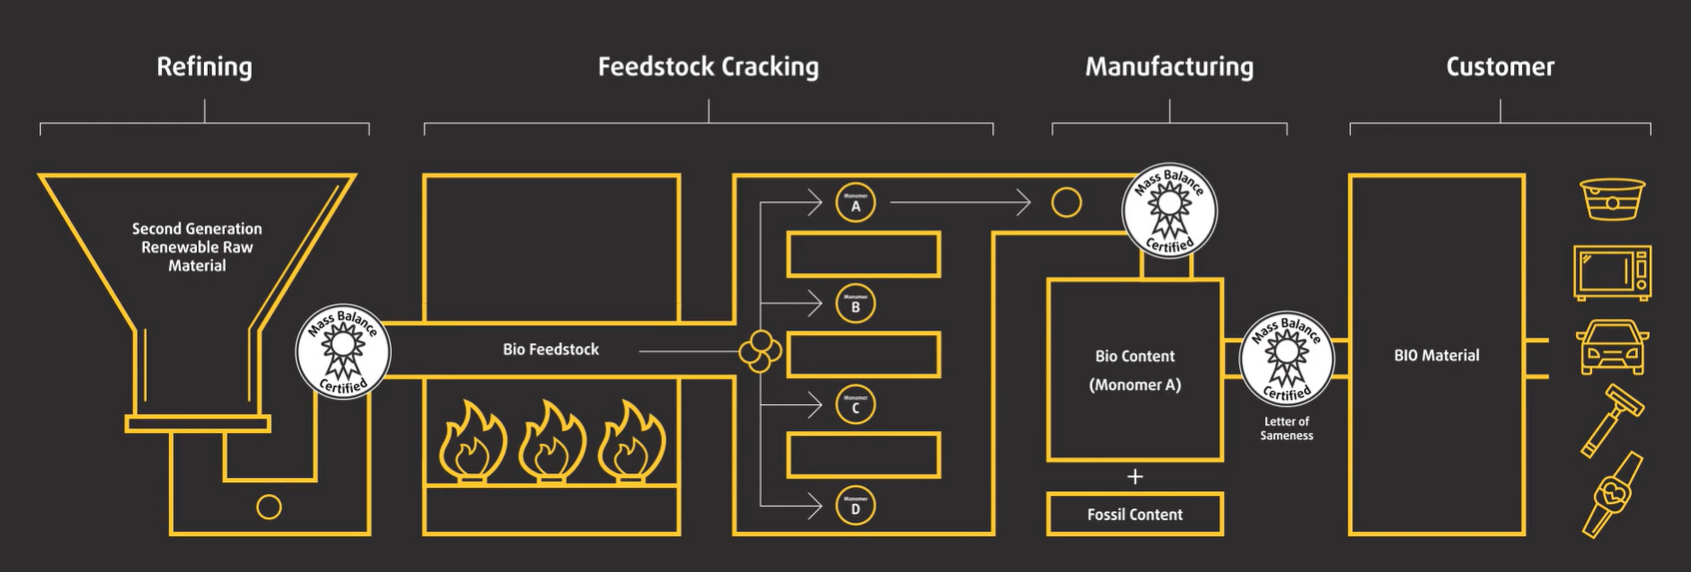 Mass Balance: Refining, Feedstock Cracking, Manufacturing, Customer